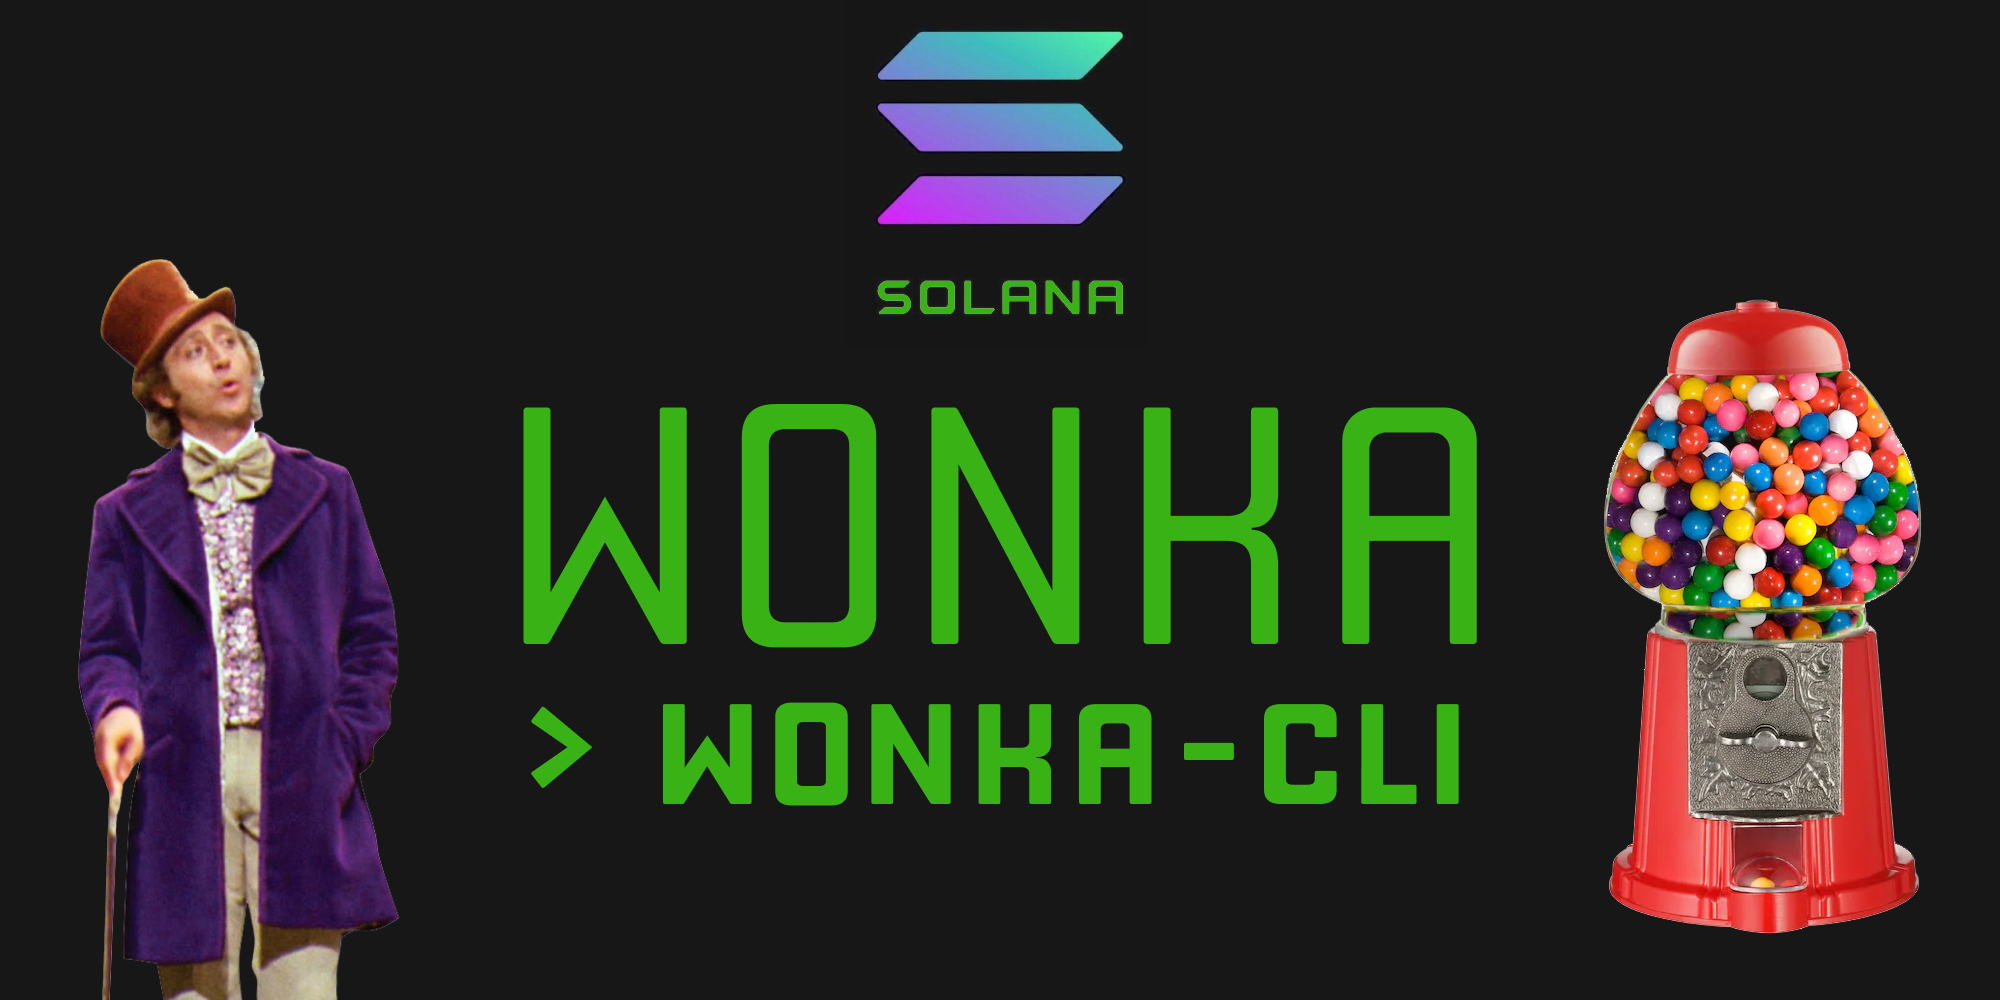 wonka-cli